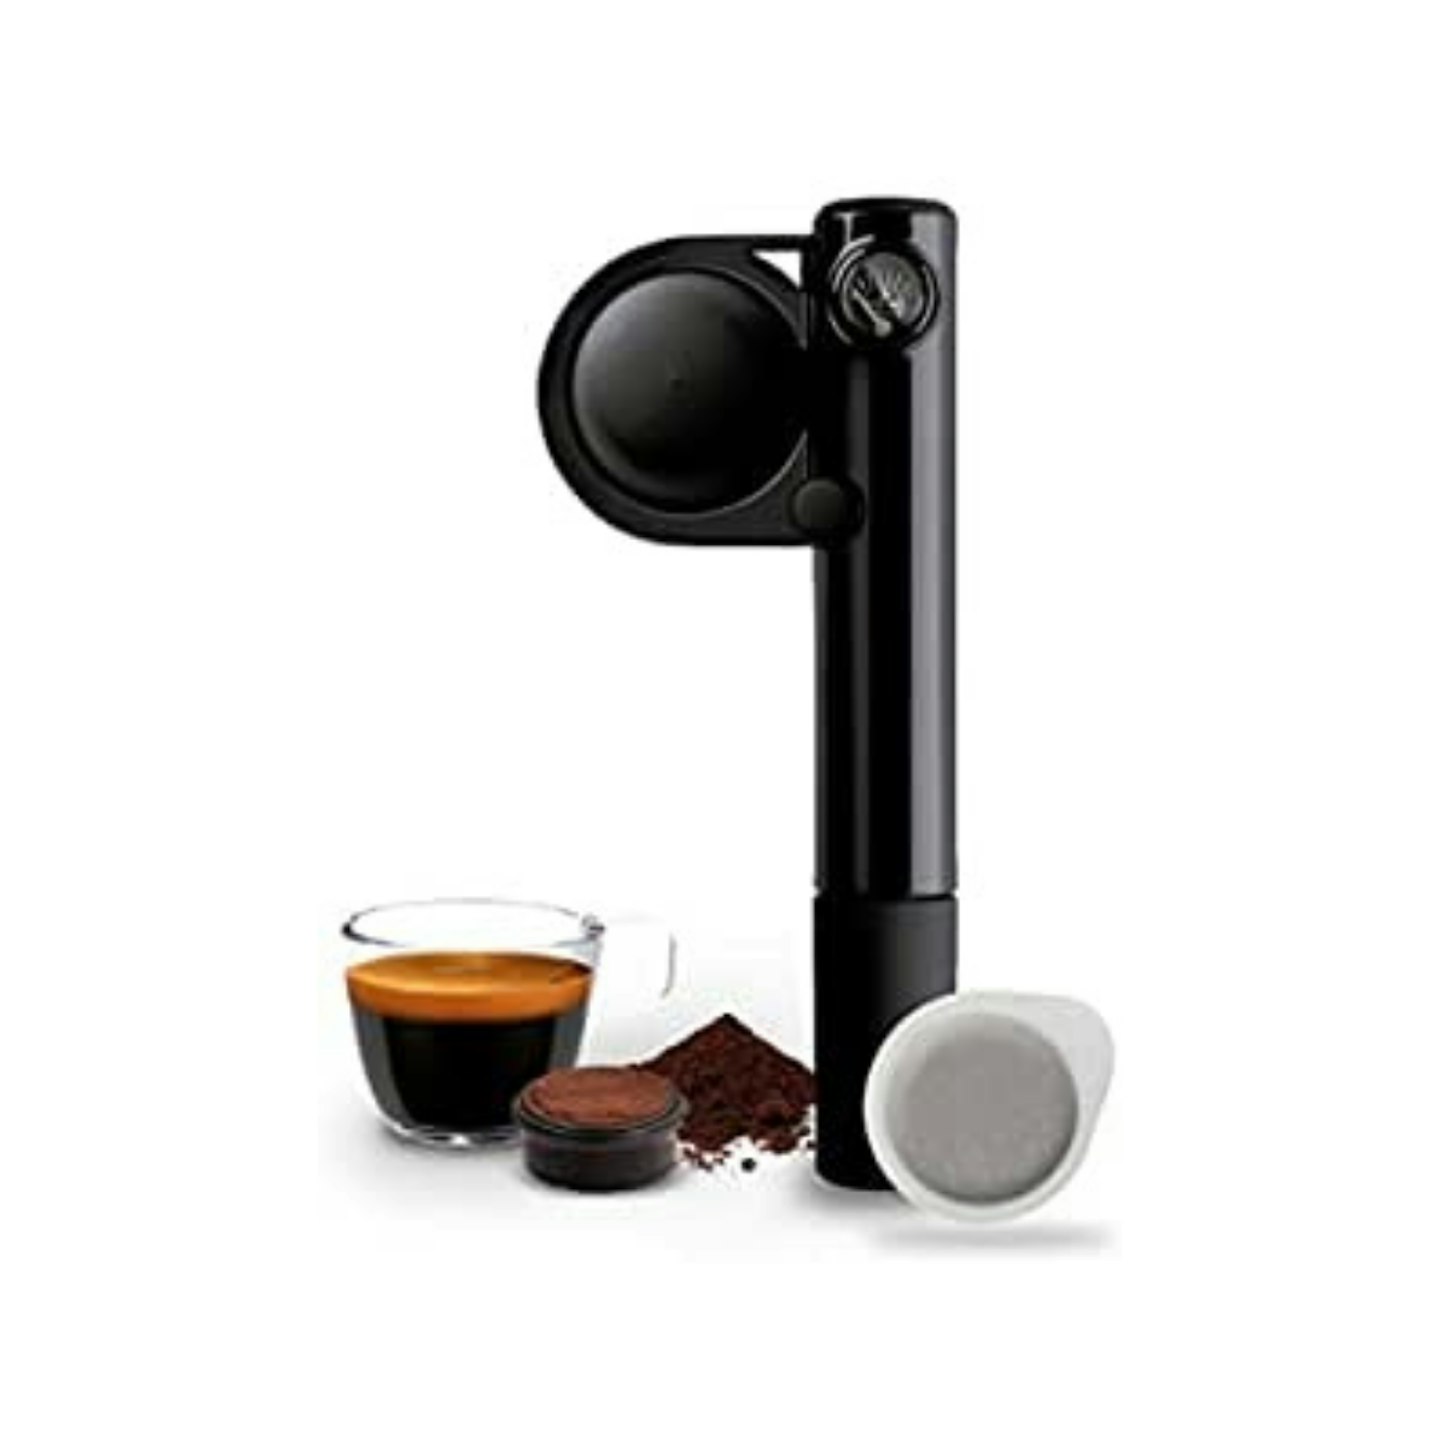 Handpresso Pump Black 48238 Portable and manual espresso machine for ESE pods or ground coffee